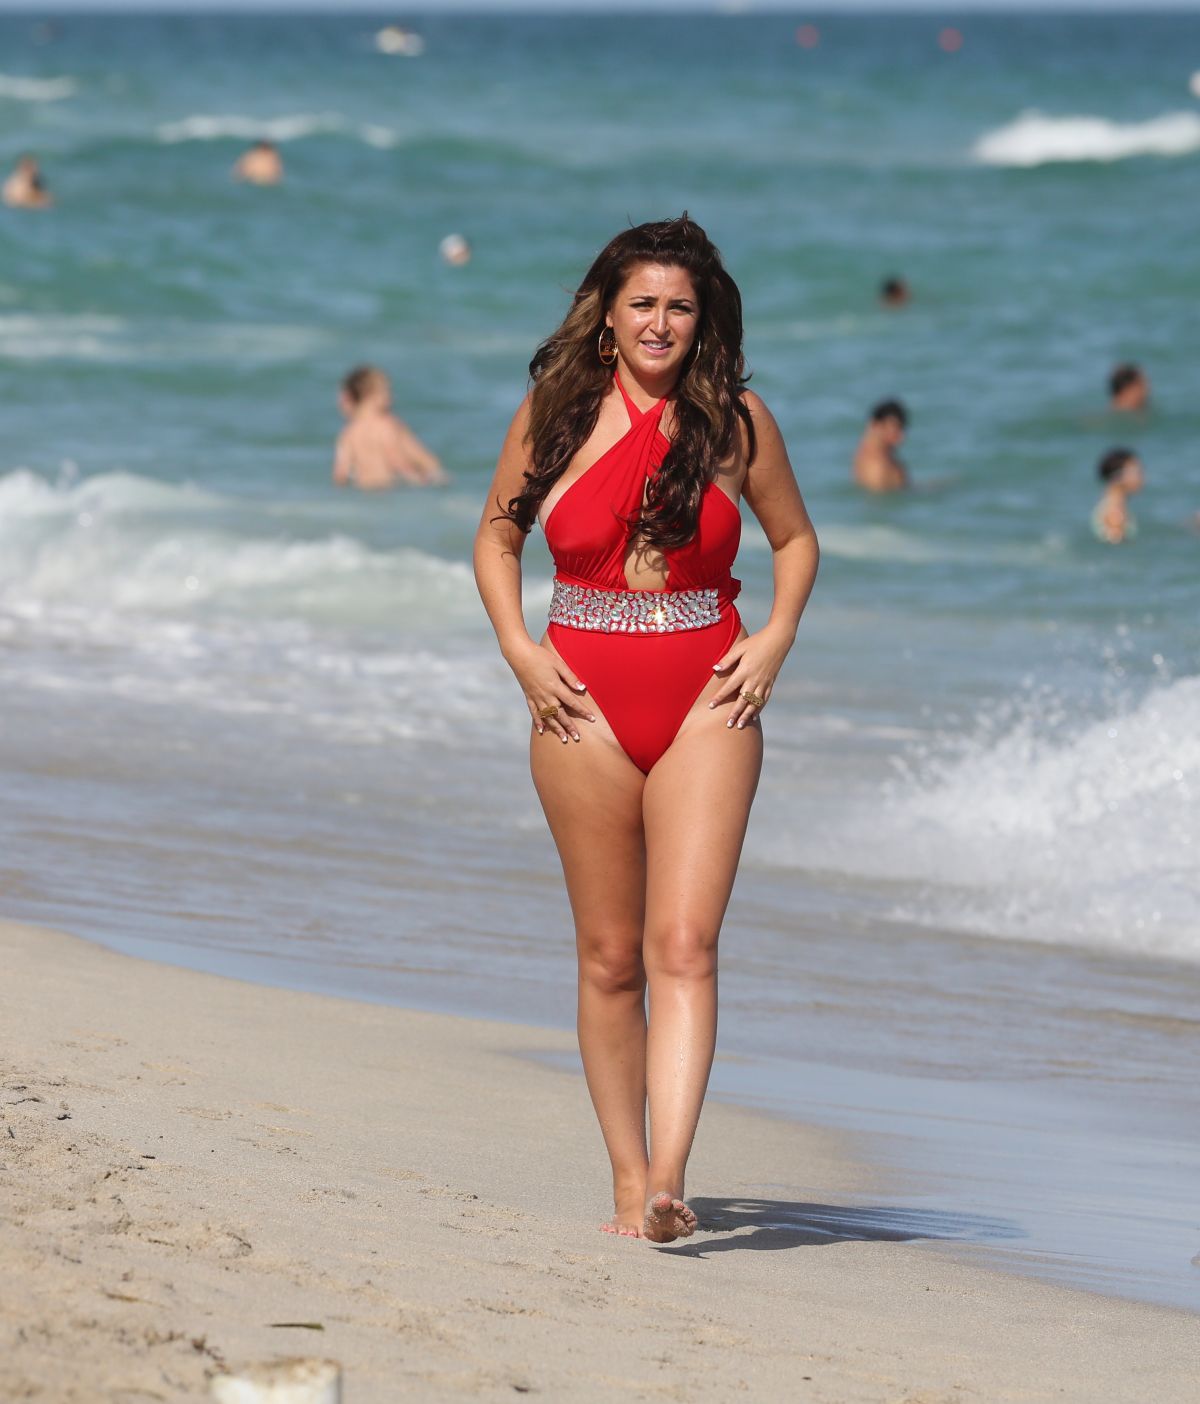 josie-goldberg-in-swimsuit-at-a-beach-in-miami-12-31-2015_7.jpg